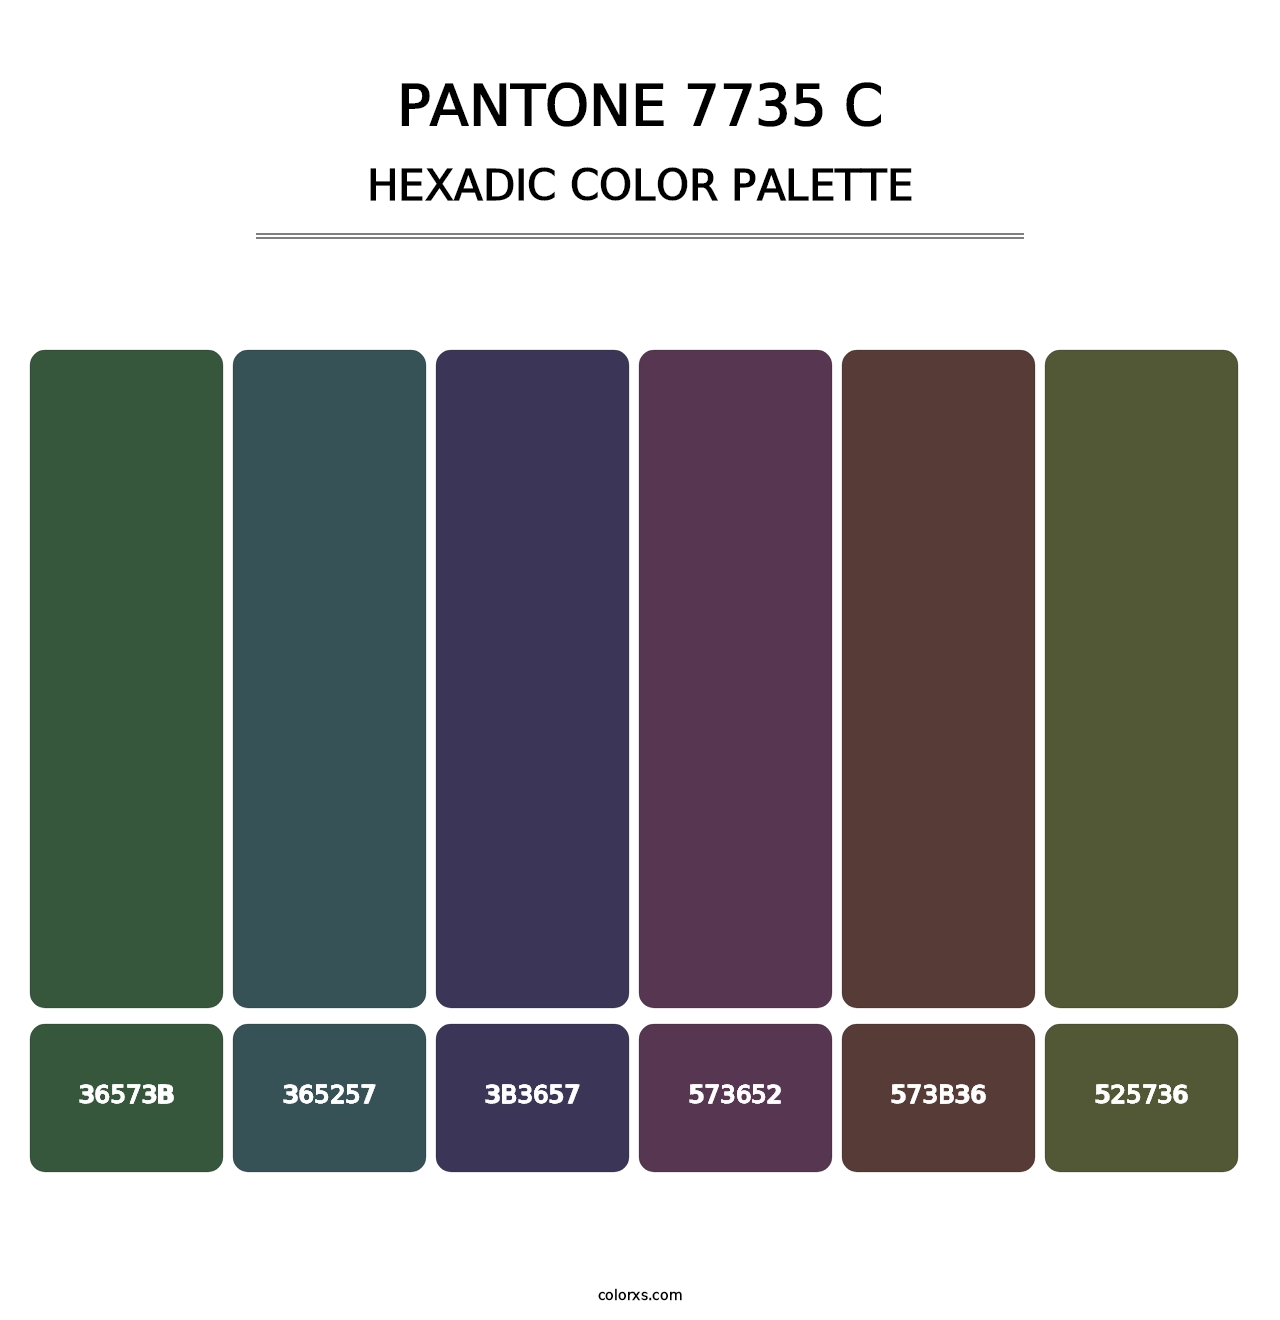 PANTONE 7735 C - Hexadic Color Palette